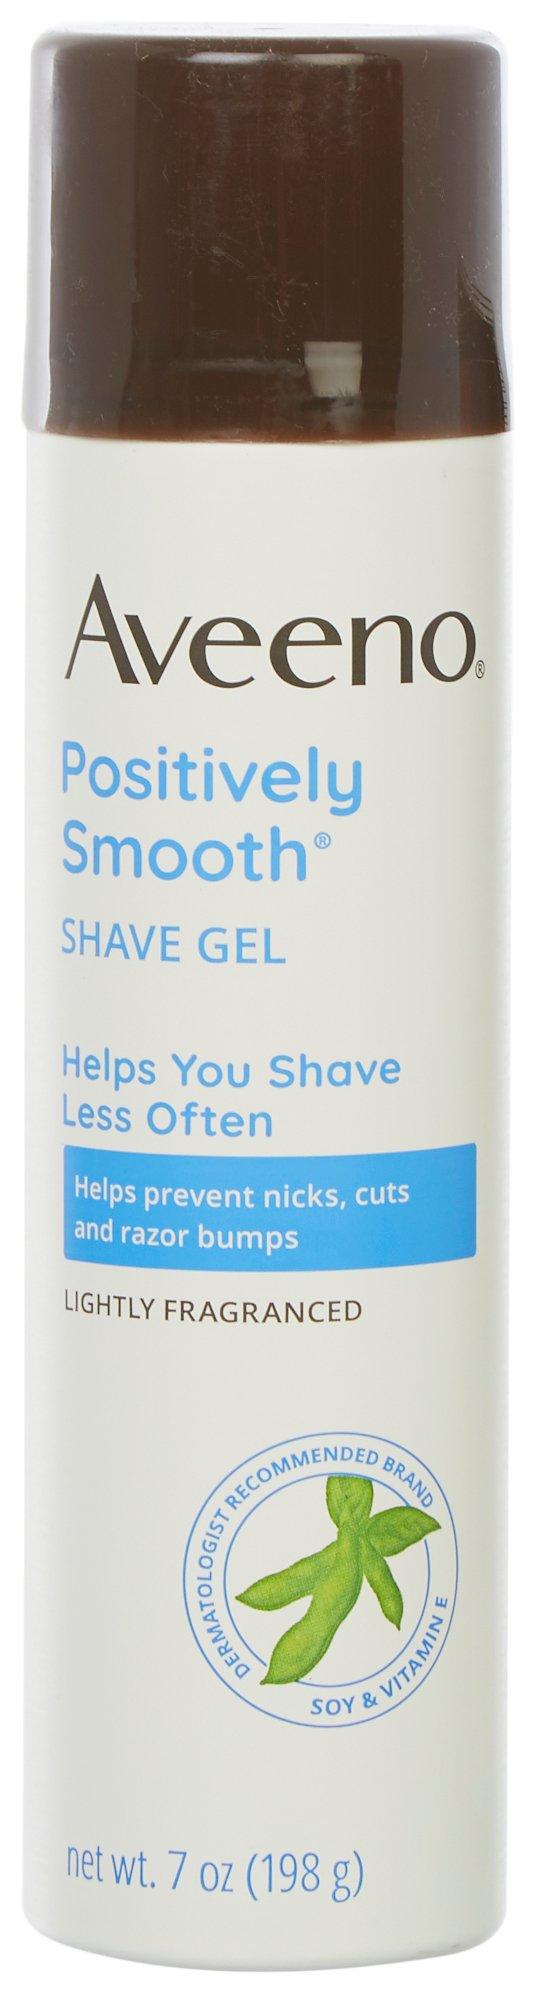 Positively Smooth Shave Gel 7 oz.